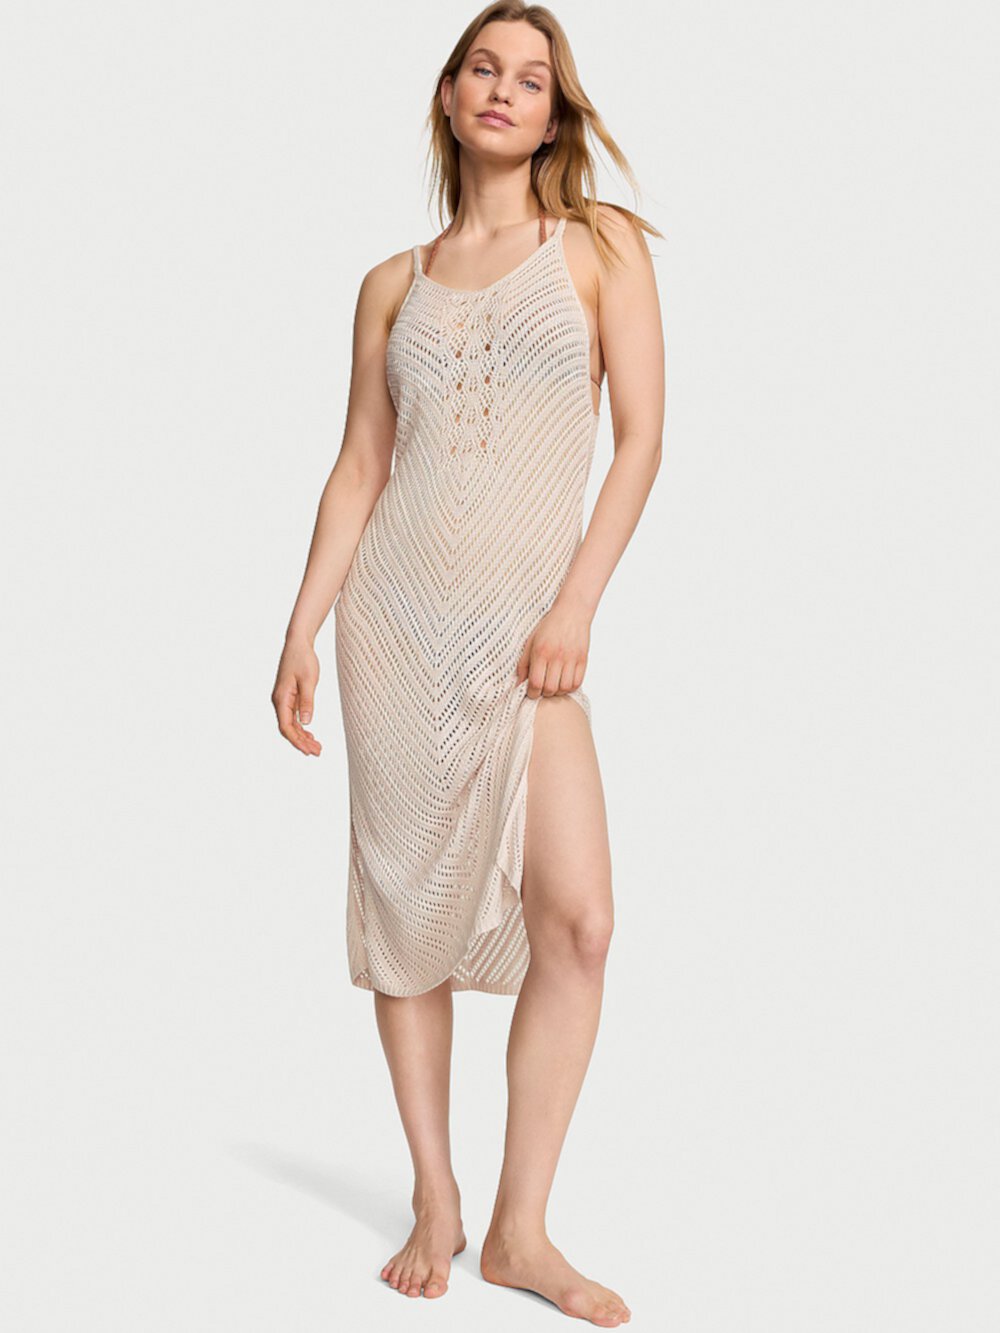 Crochet Cover-Up Dress Victoria's Secret Swim